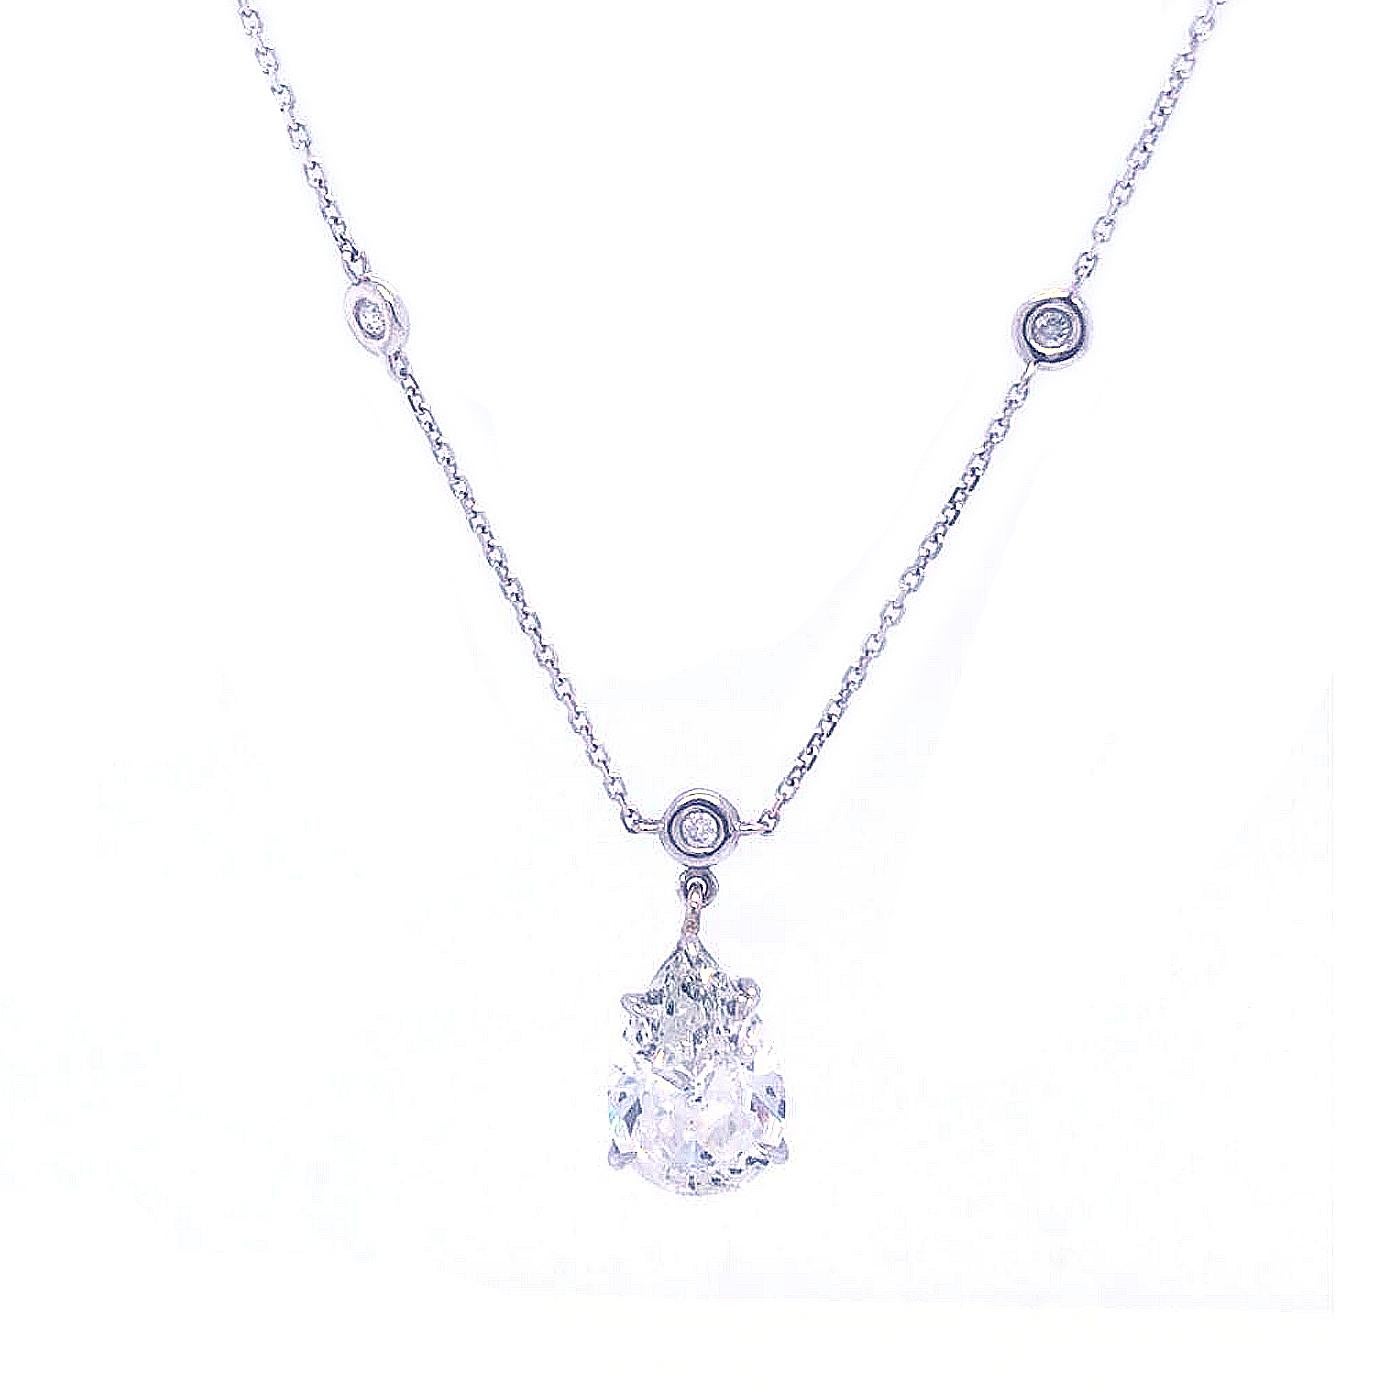 Women's Pear Shape Diamond Link Chain Necklace Pendant Dangling 14K White Gold 2.65ct 4g